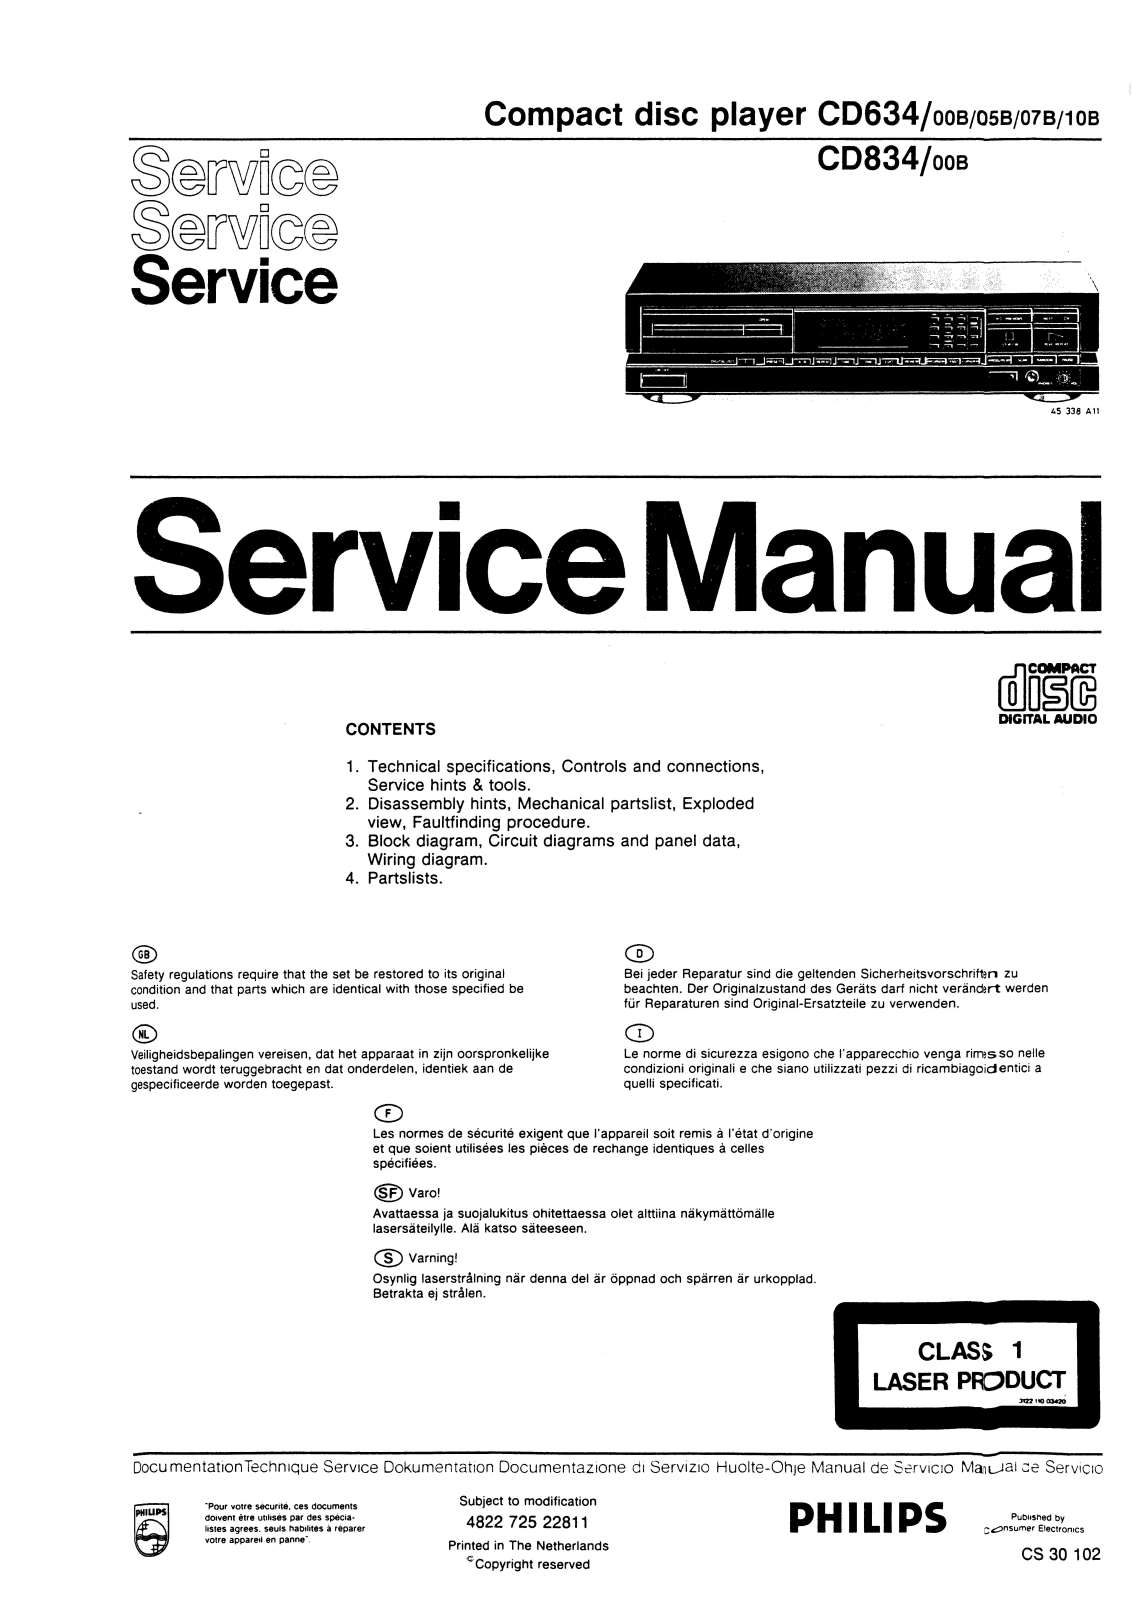 Philips CD-634, CD-834 Service manual